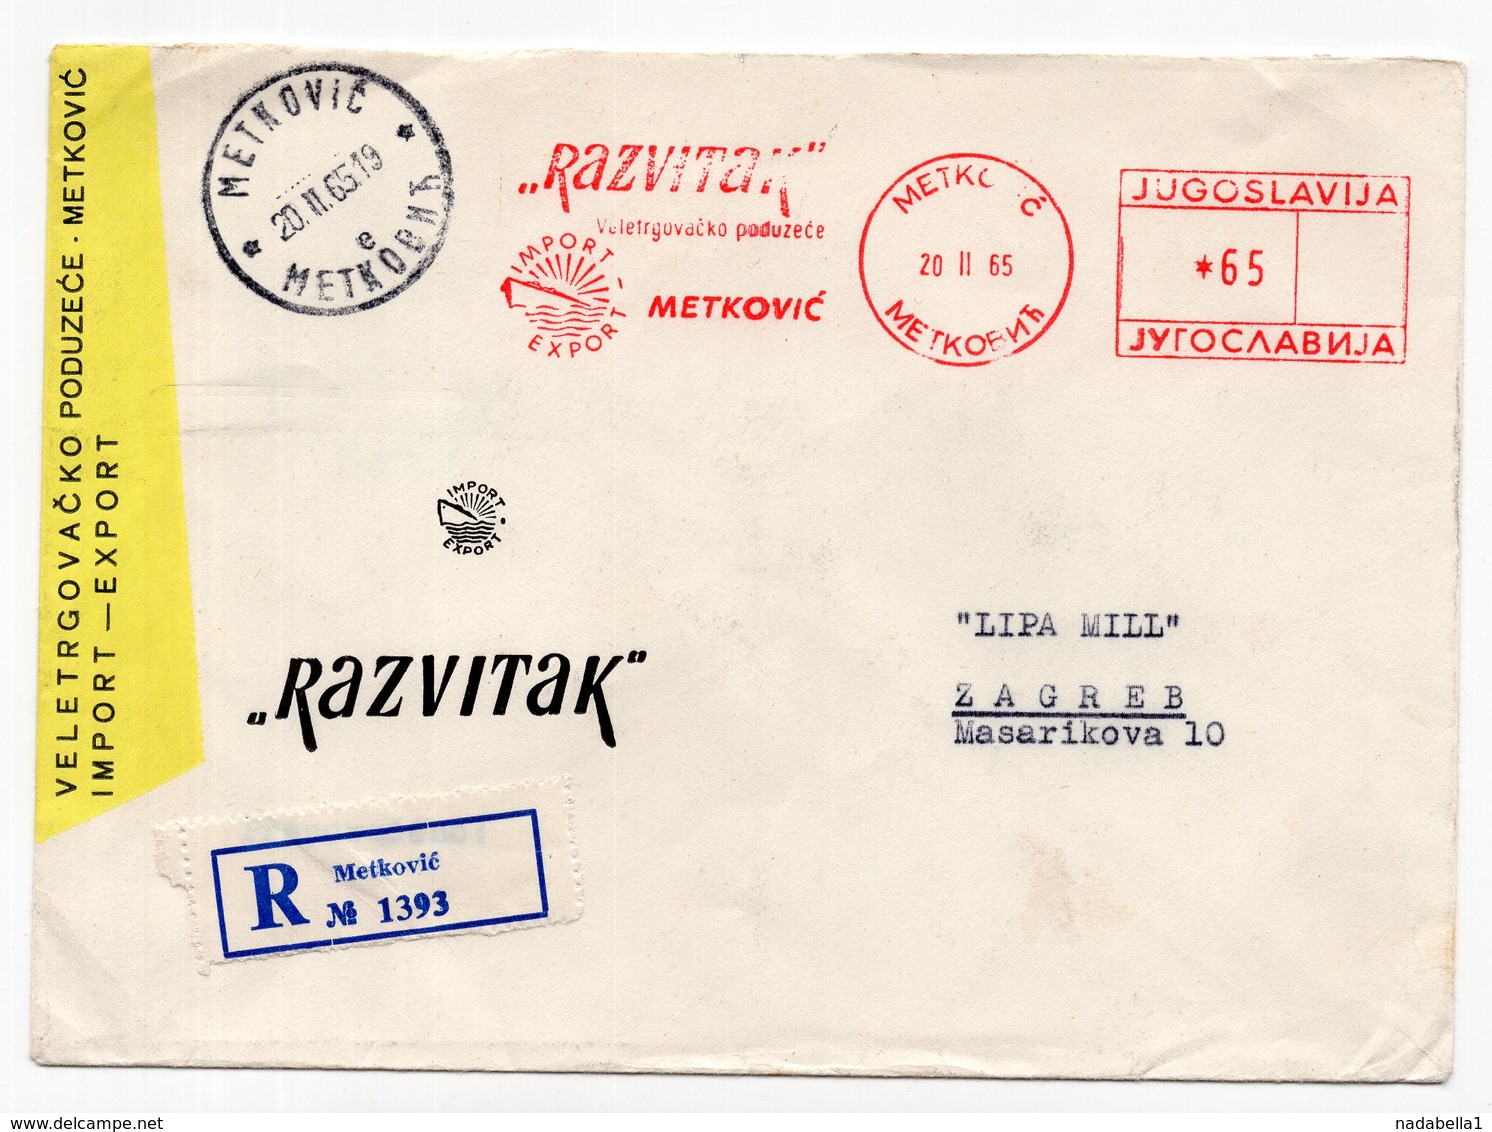 1965 YUGOSLAVIA, CROATIA, METKOVIC TO ZAGREB, REGISTERED COVER, RAZVITAK, COMPANY'S HEAD COVER - Covers & Documents